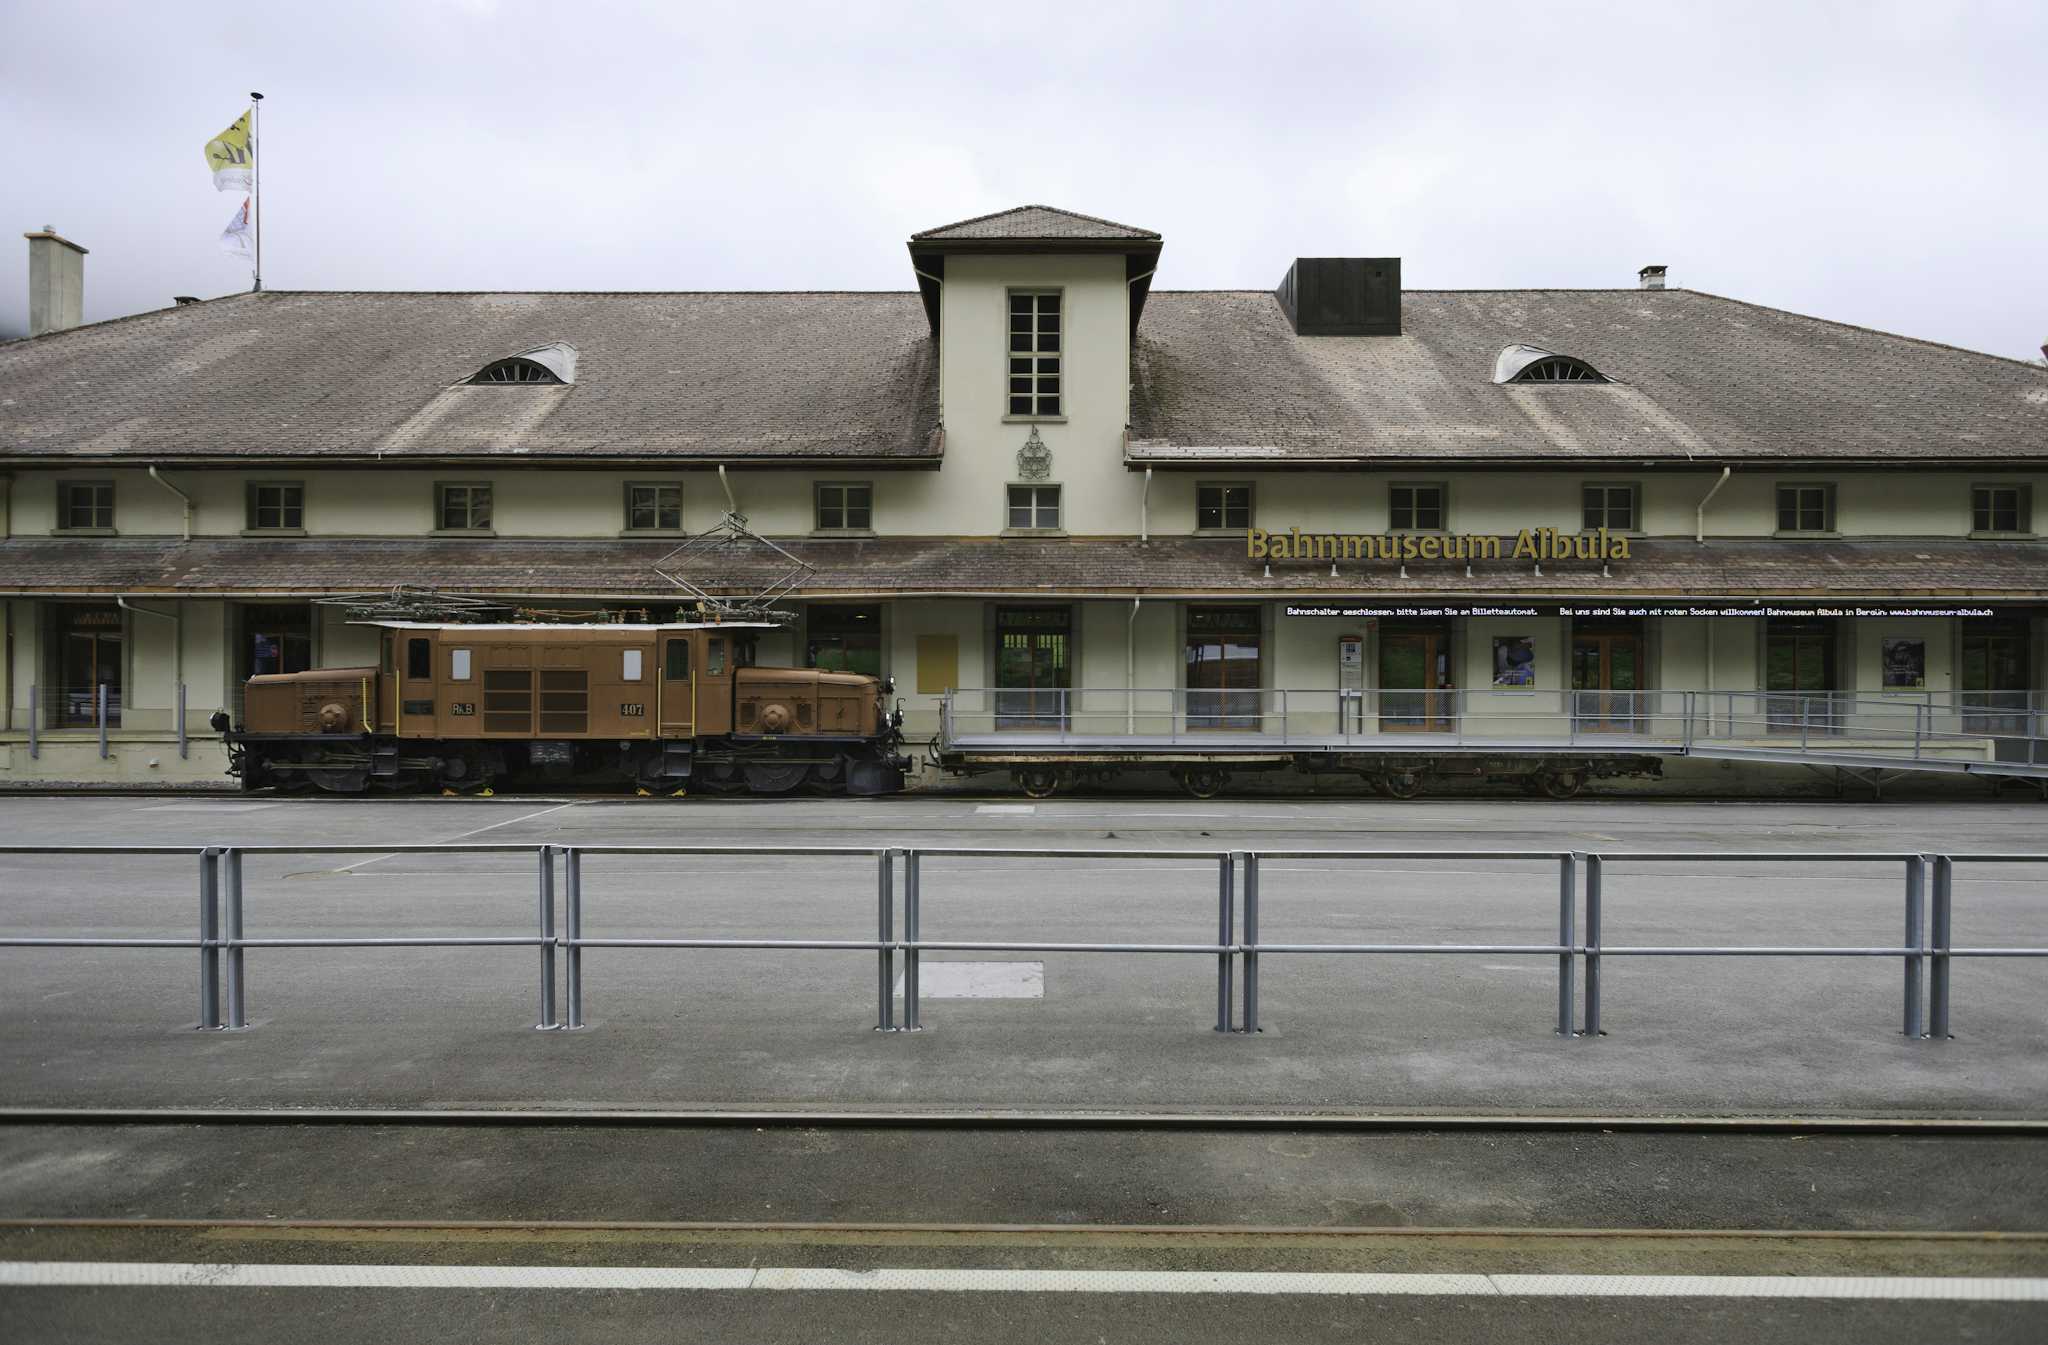 Albula Railway Museum